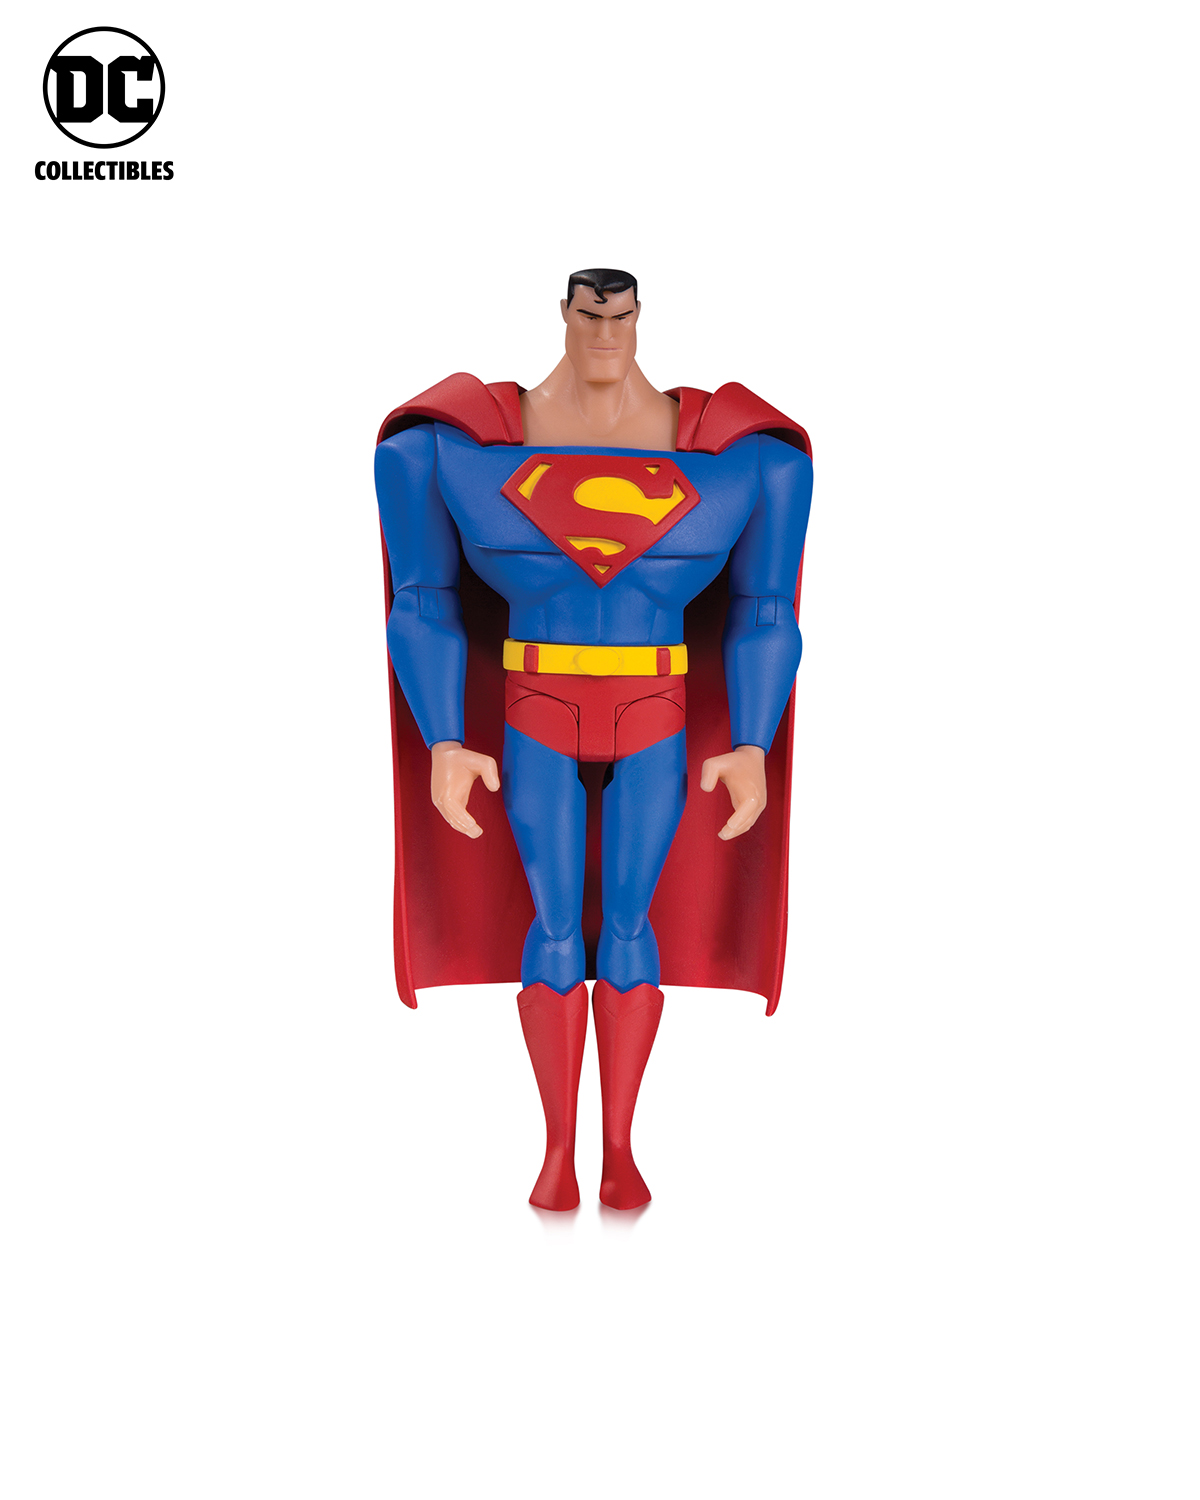 Jl_animated_superman_1